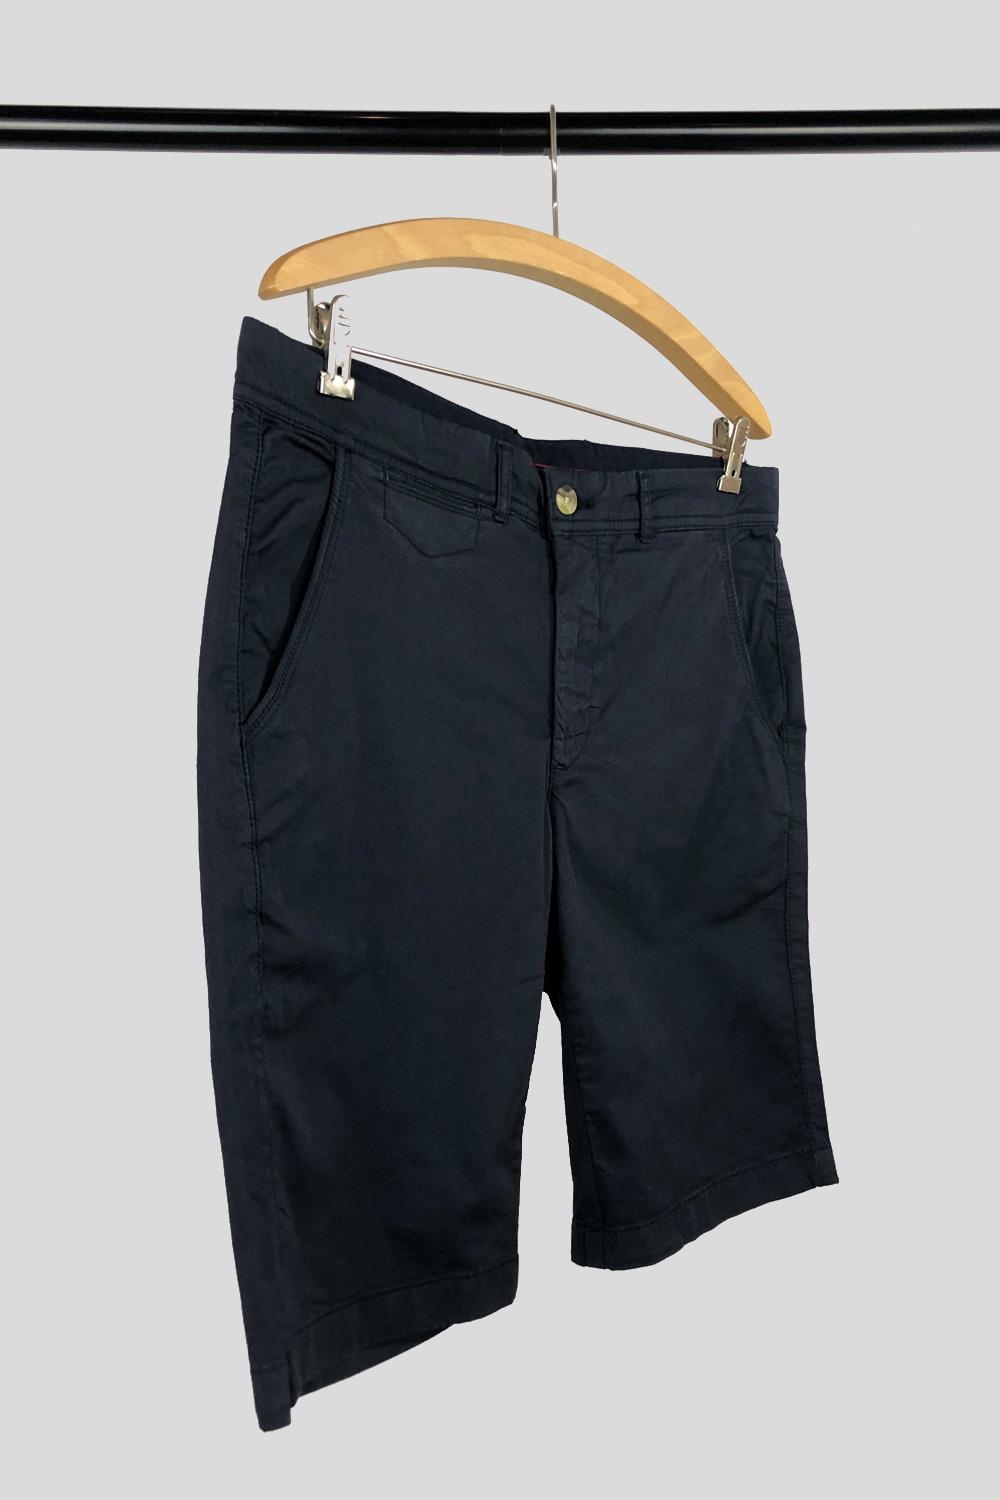 Pantalón corto elástico marino | 1604HPBR01/016